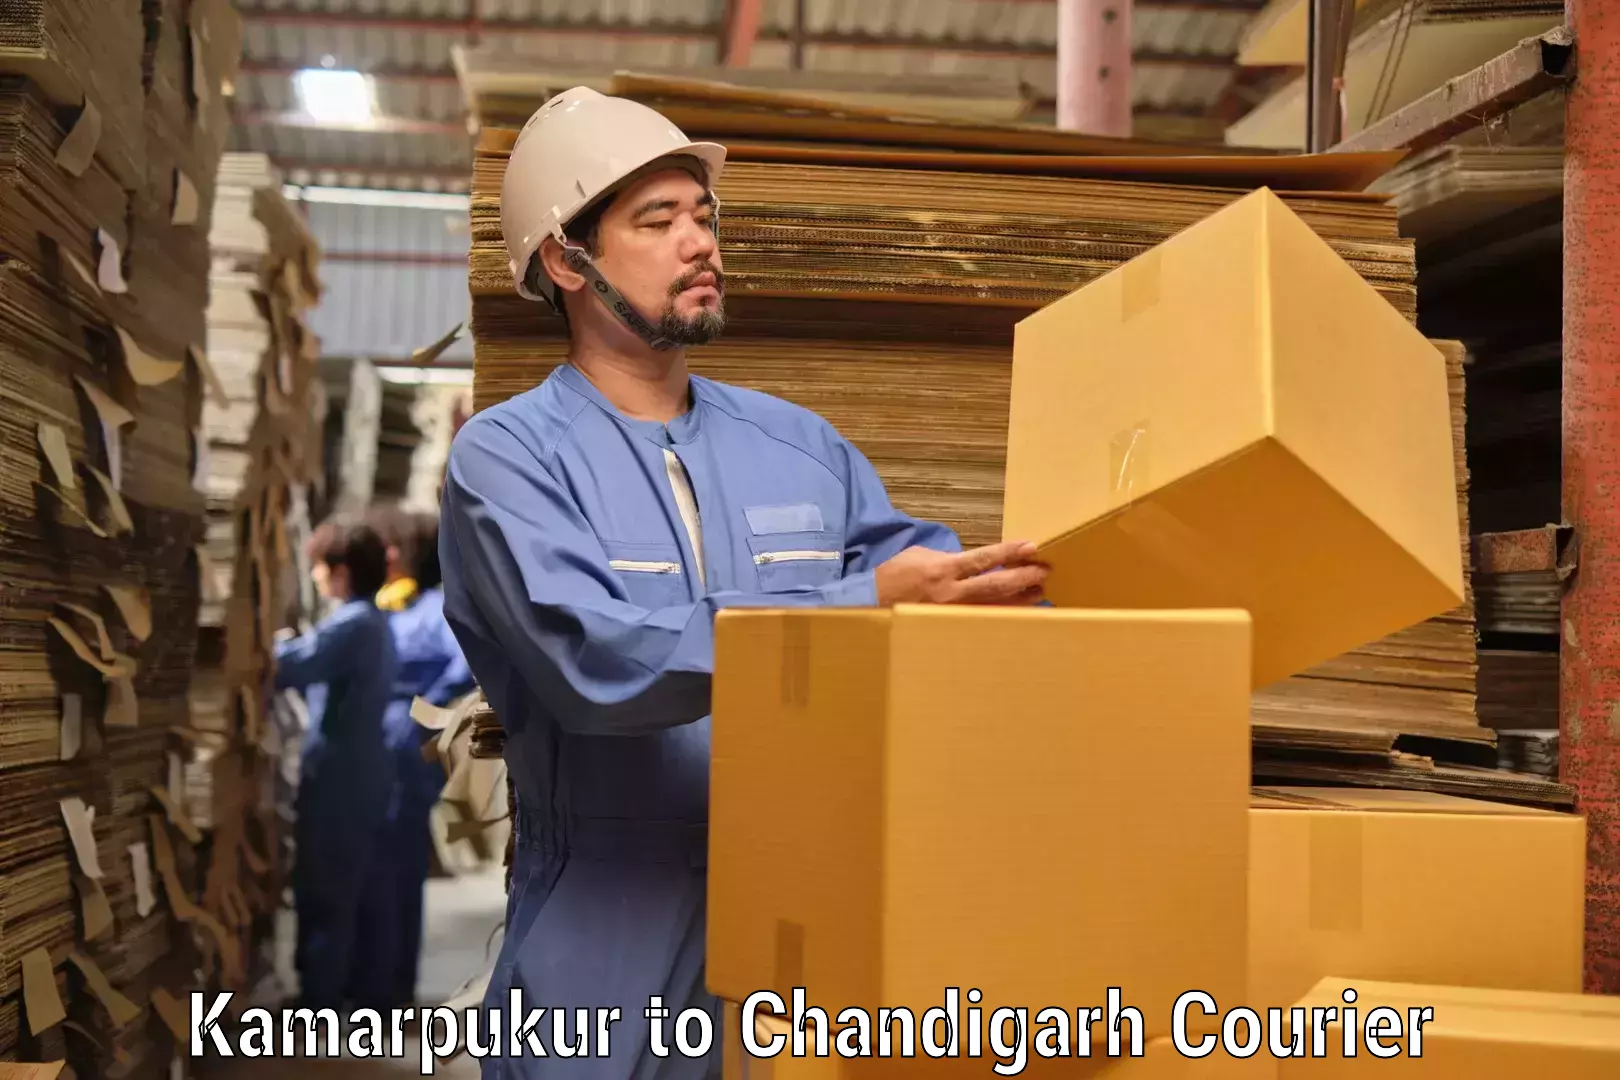 Delivery service partnership Kamarpukur to Chandigarh